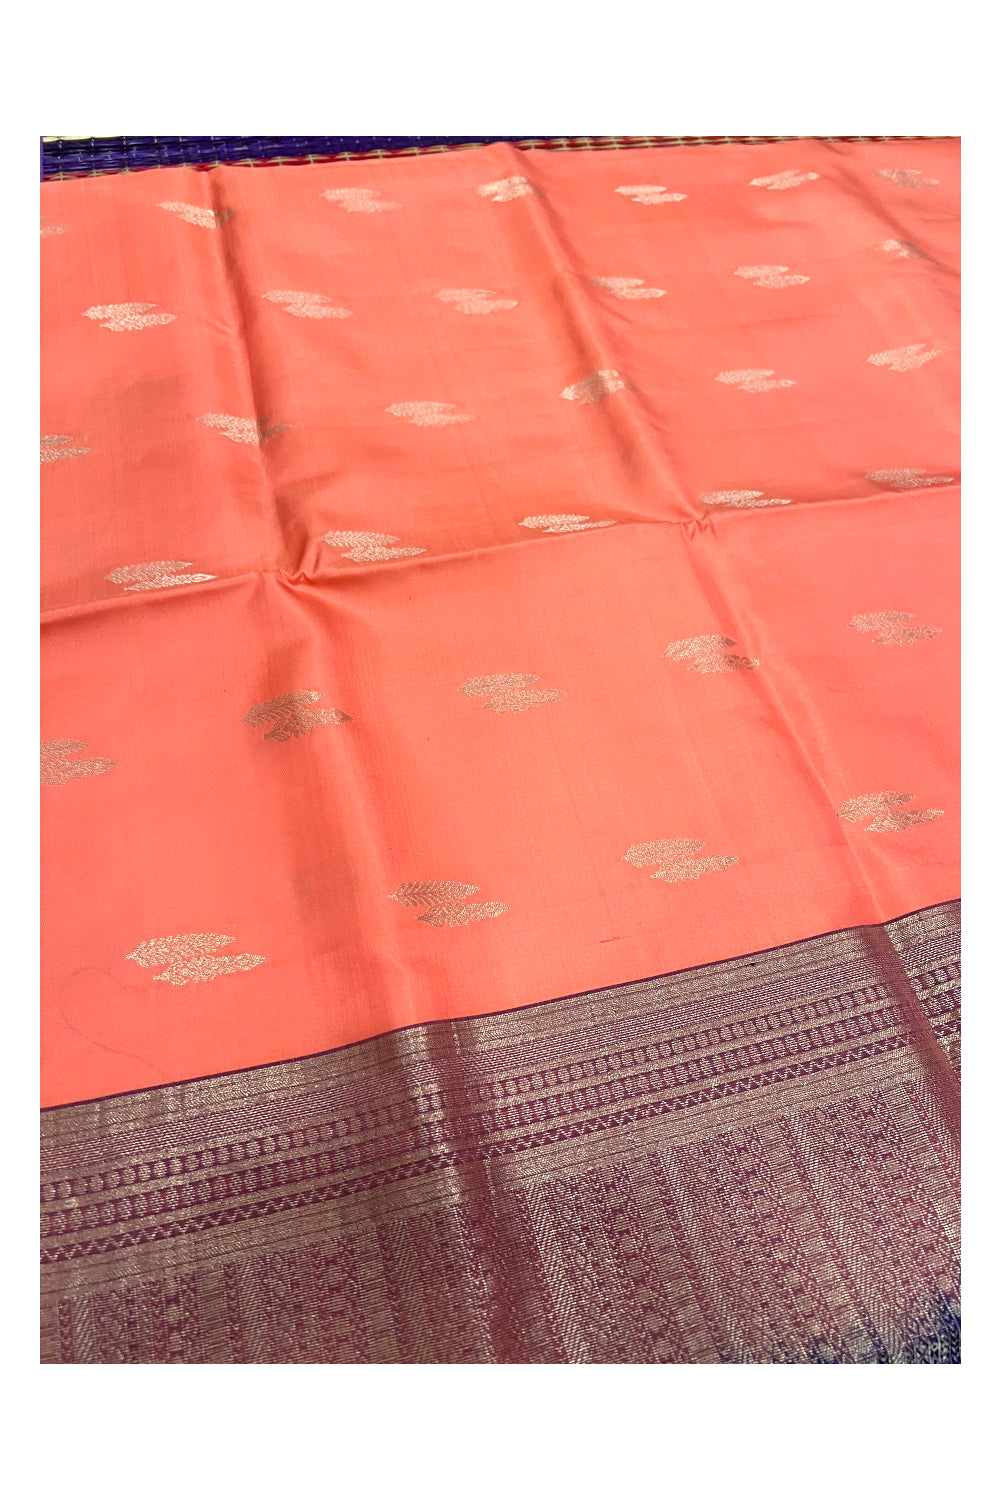 Southloom Handloom Pure Silk Kanchipuram Saree with Peach Body and Navy Blue Blouse Piece